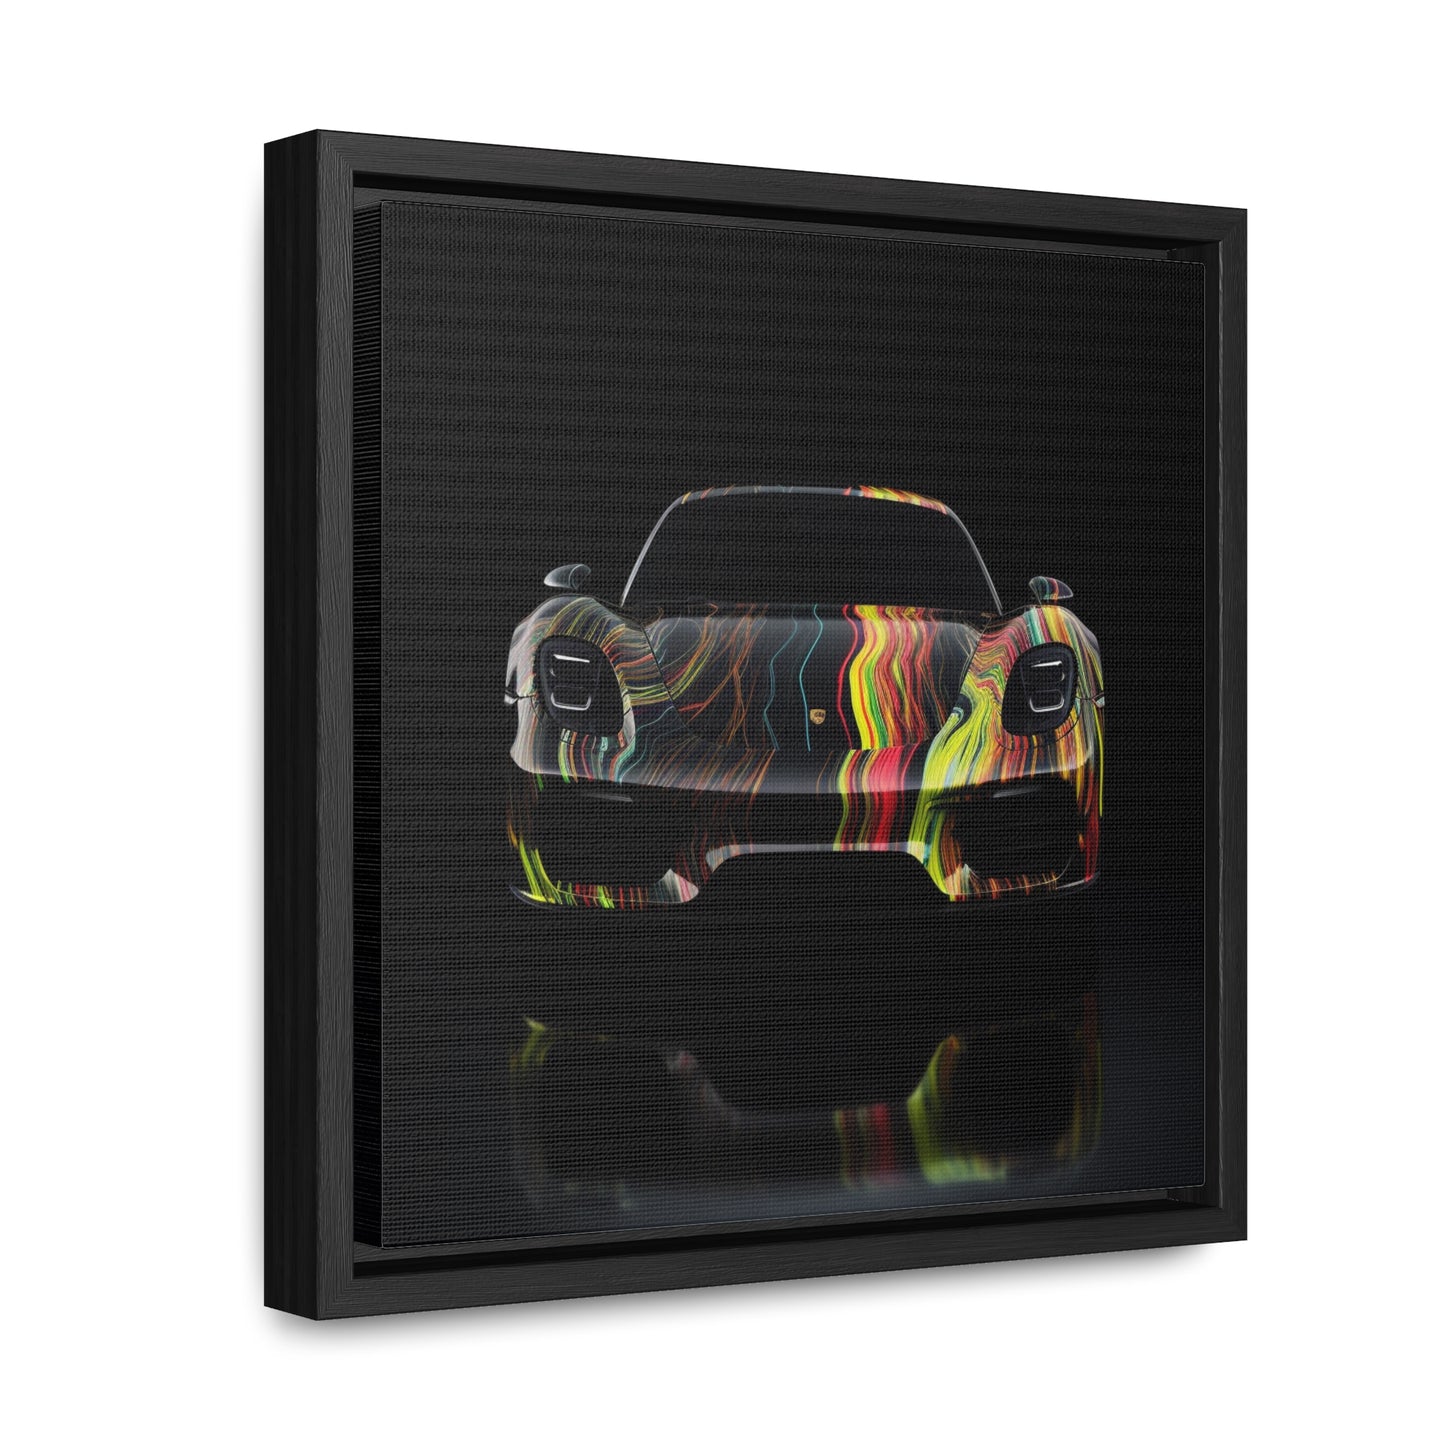 Gallery Canvas Wraps, Square Frame Porsche Line 2